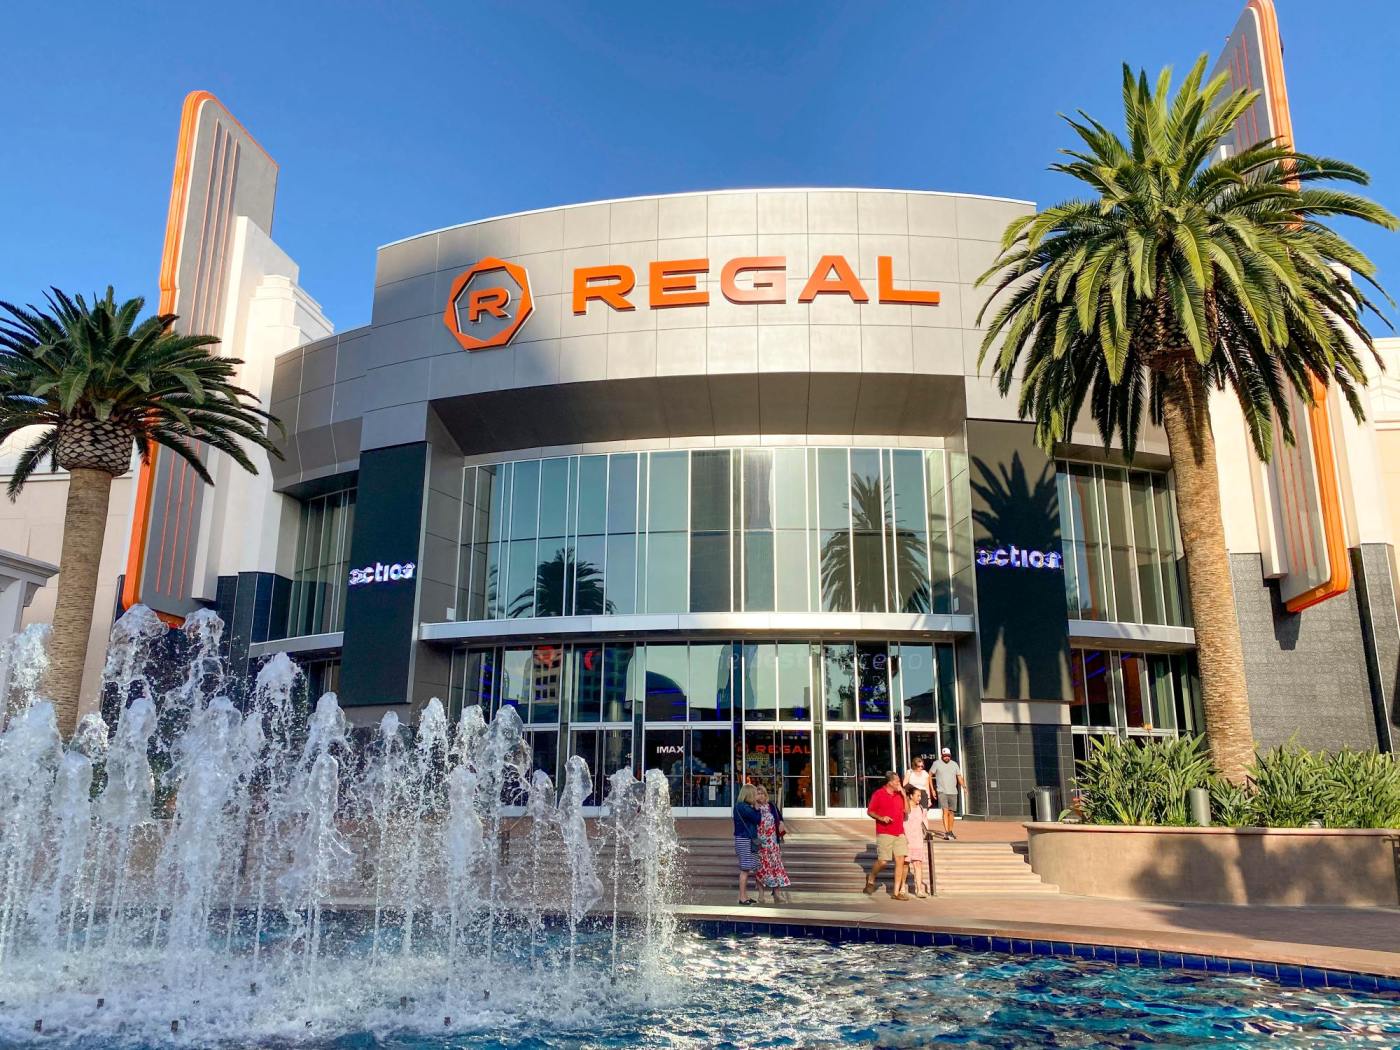 Regal closing Costa Mesa, Yorba Linda theaters HaaS Unlimited